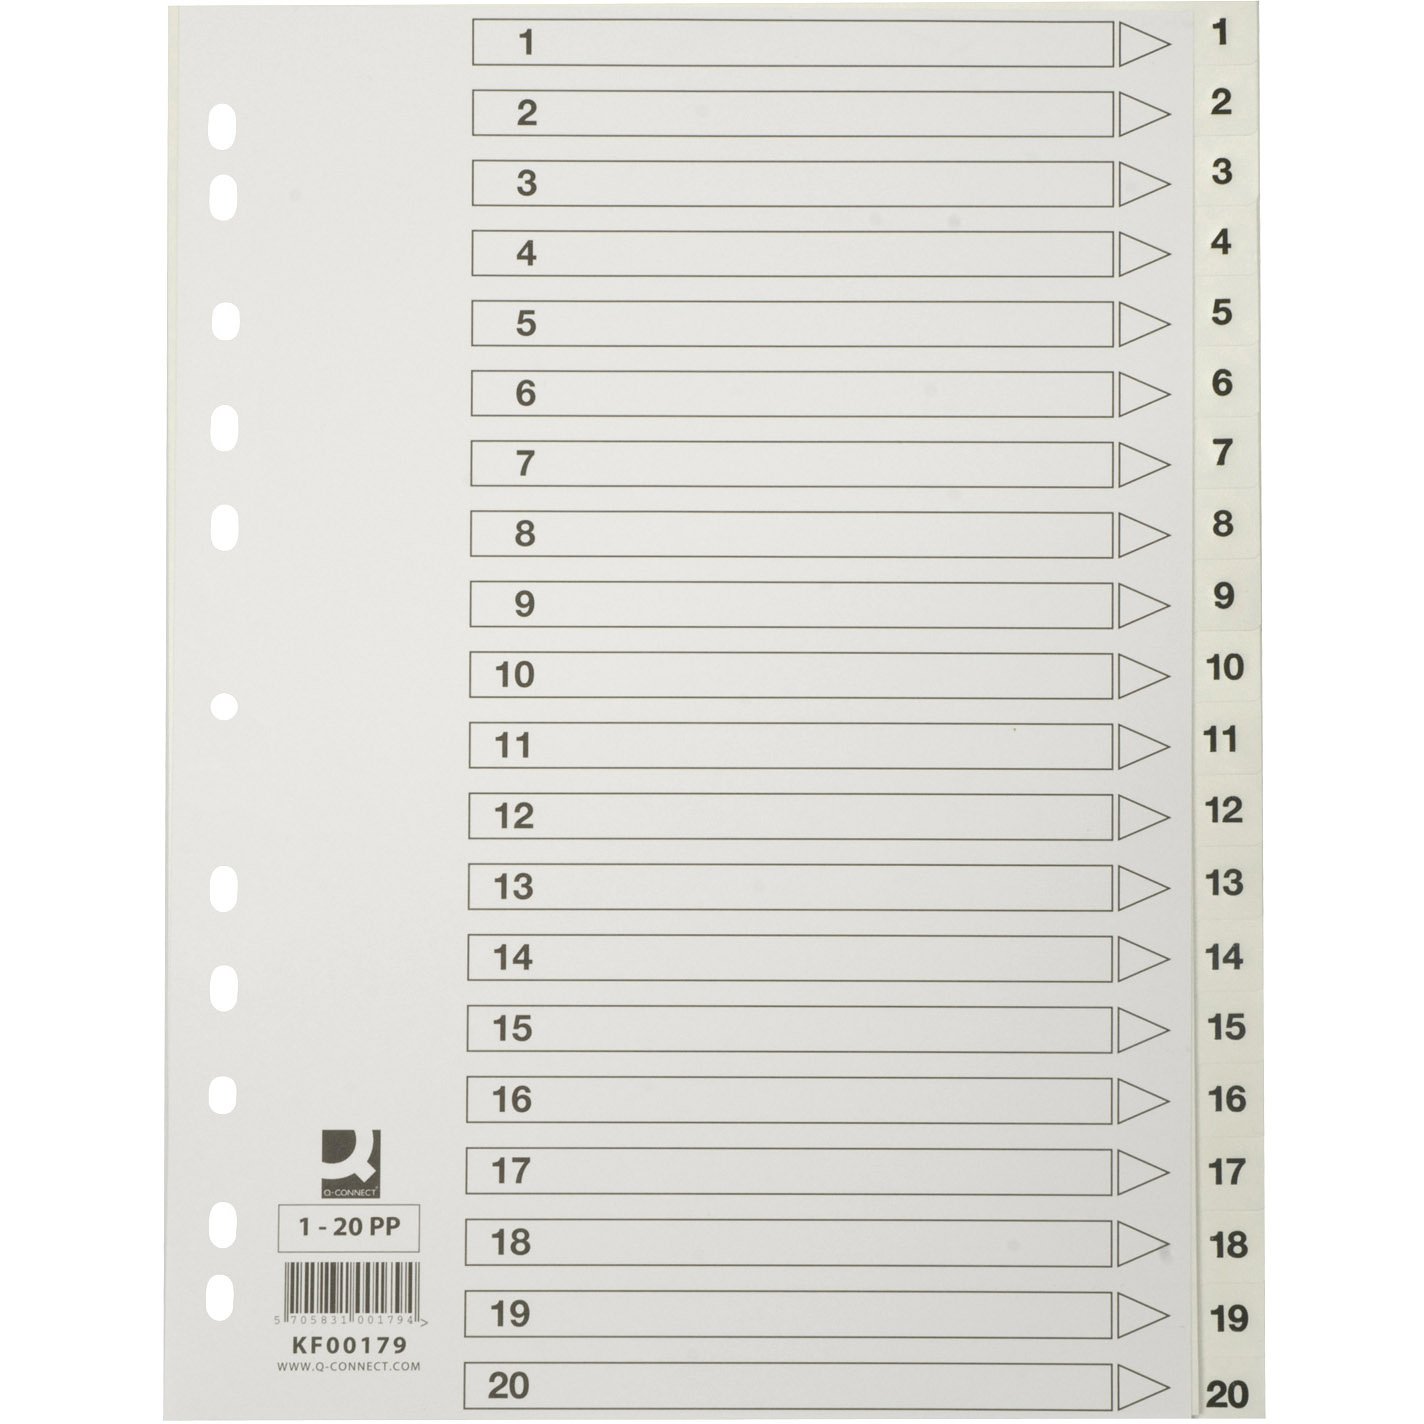 Q-connect register A4 1-20 hvid